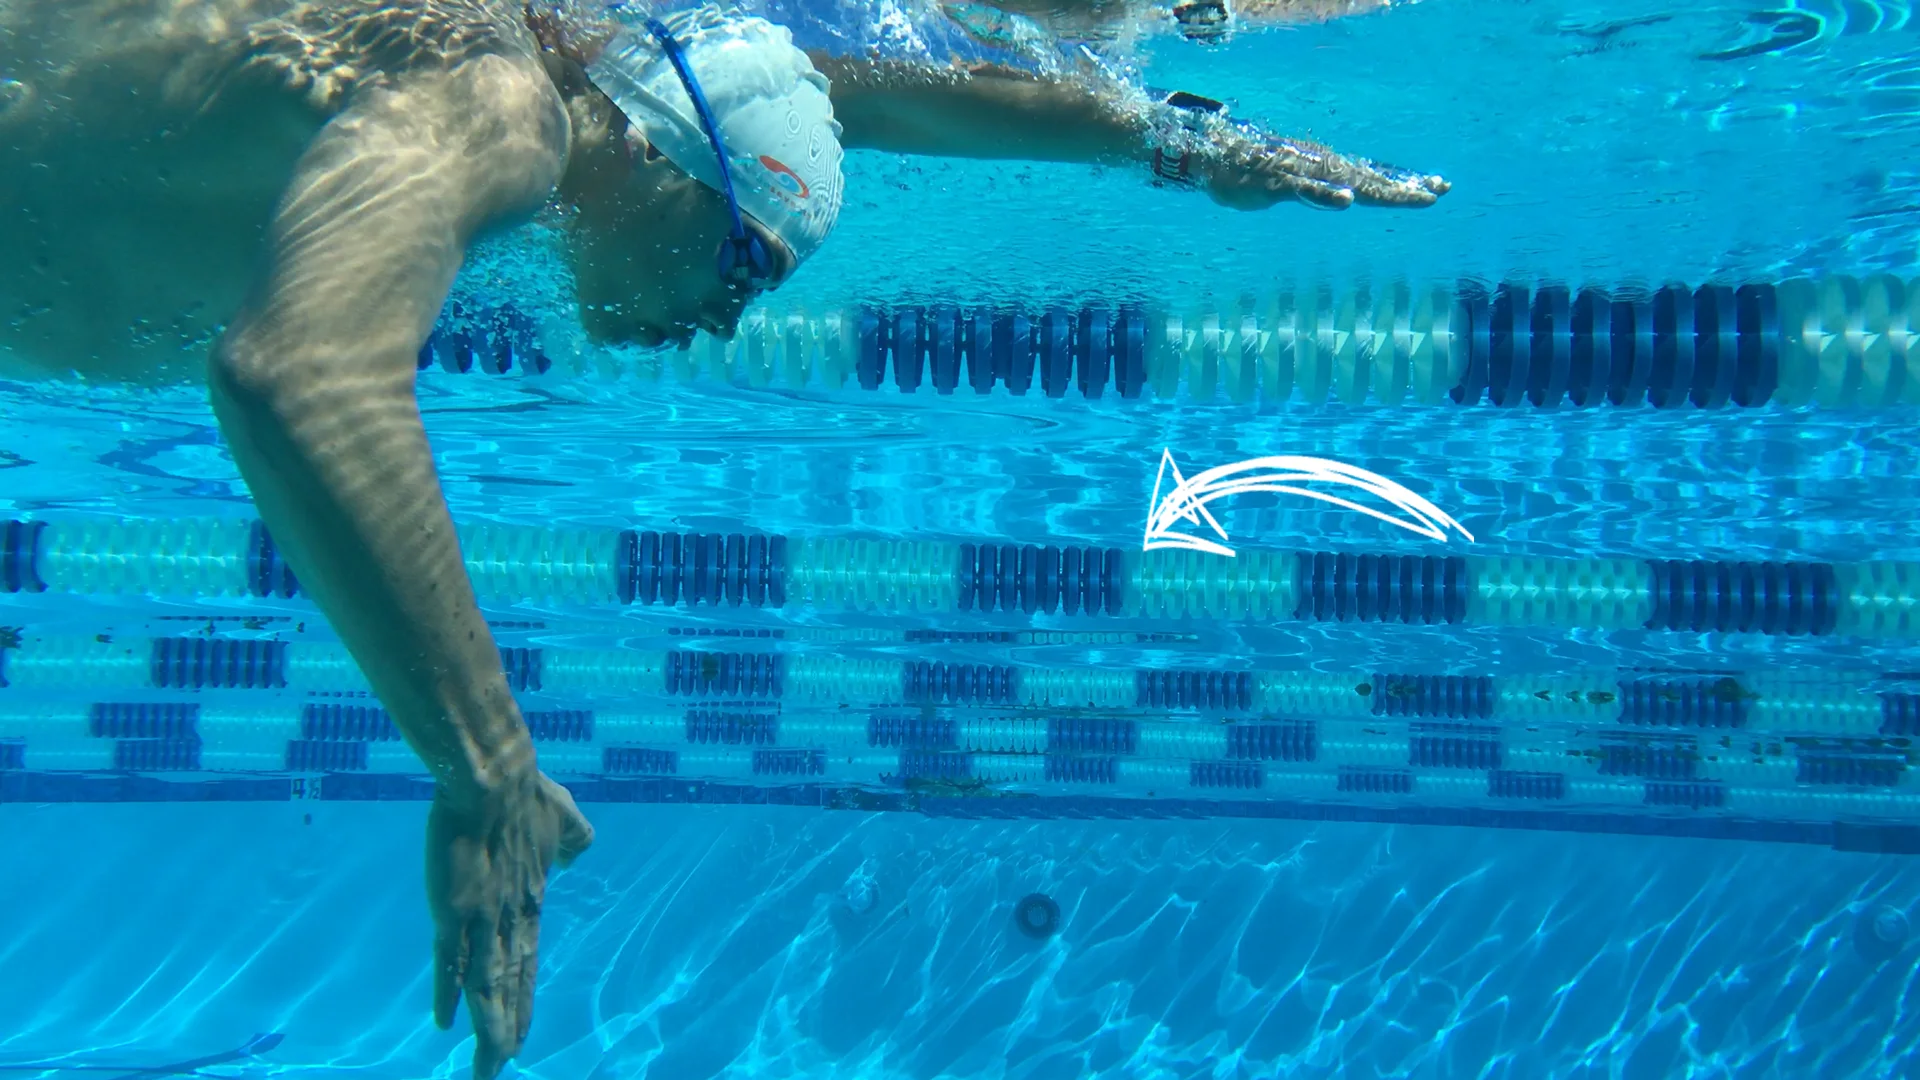 swimming training online